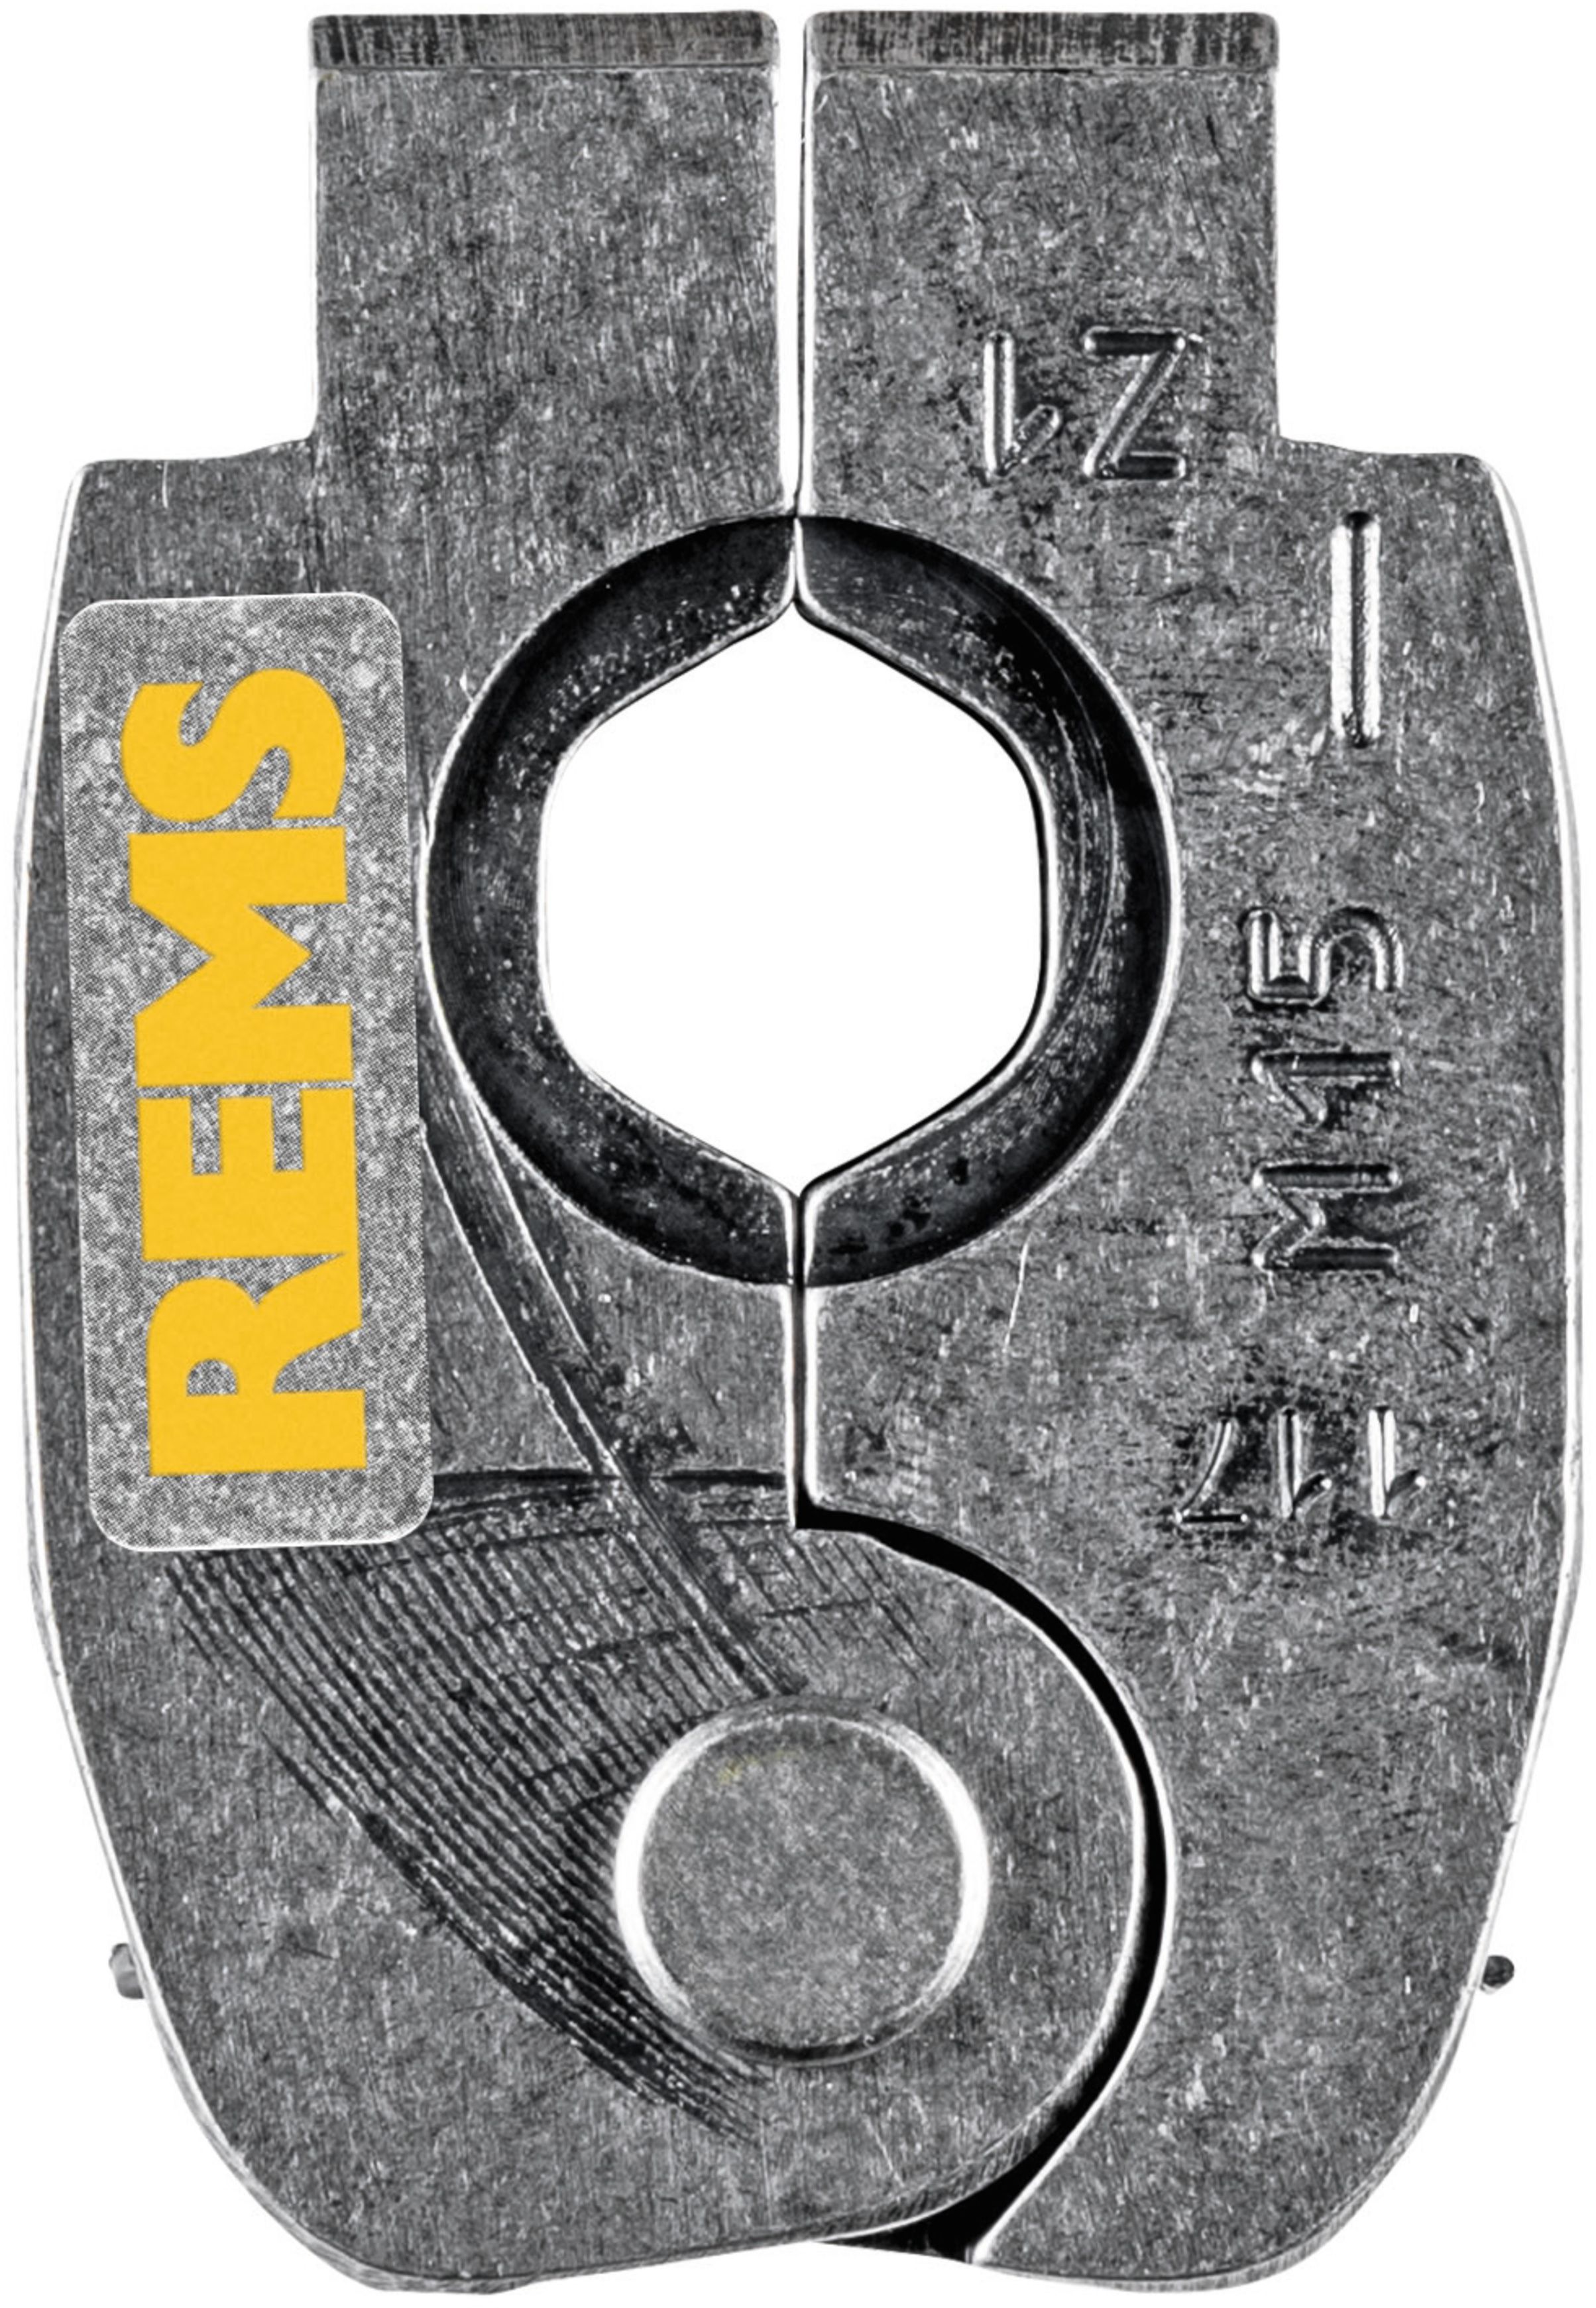 REMS PRESSRING M 22 45° (PR-2B) 574526 R, für Mini-Press ACC - Sanitärwerkzeuge